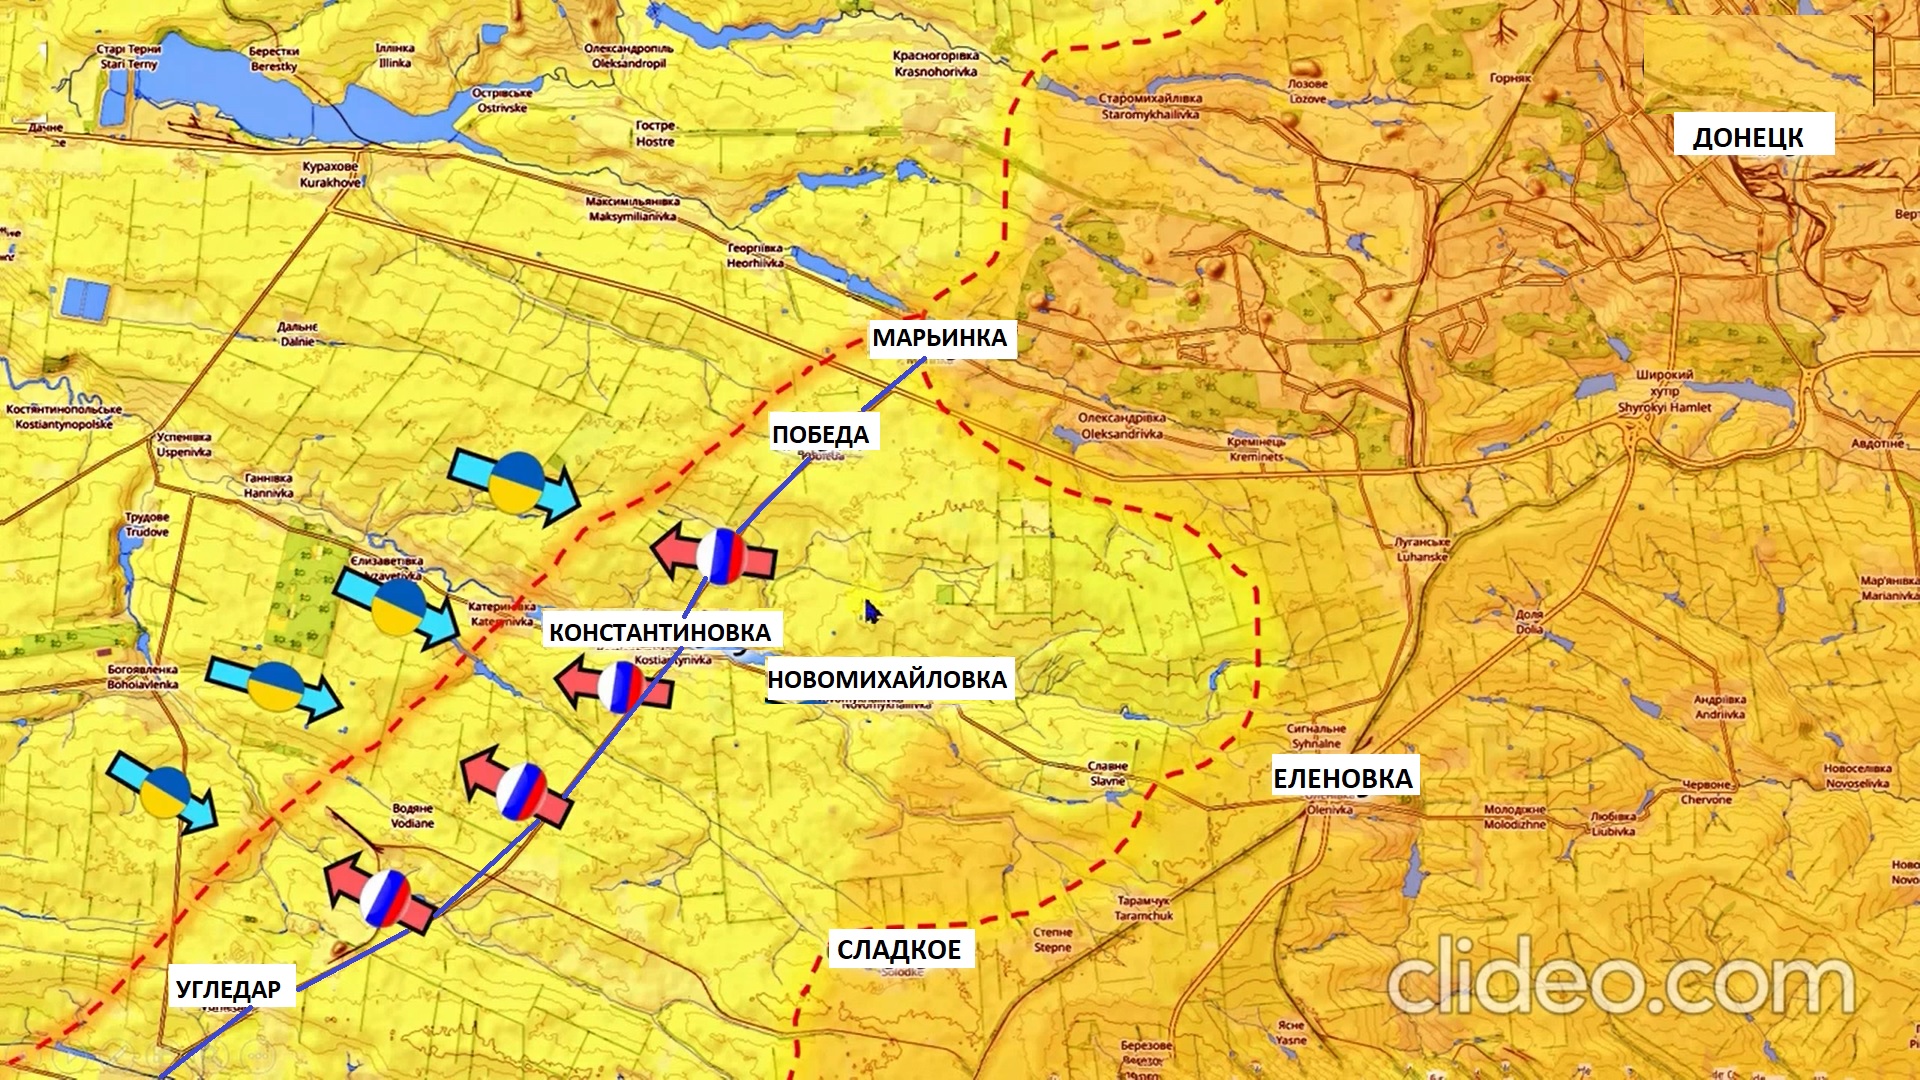 Видео боевых действий на украине сейчас телеграмм фото 22